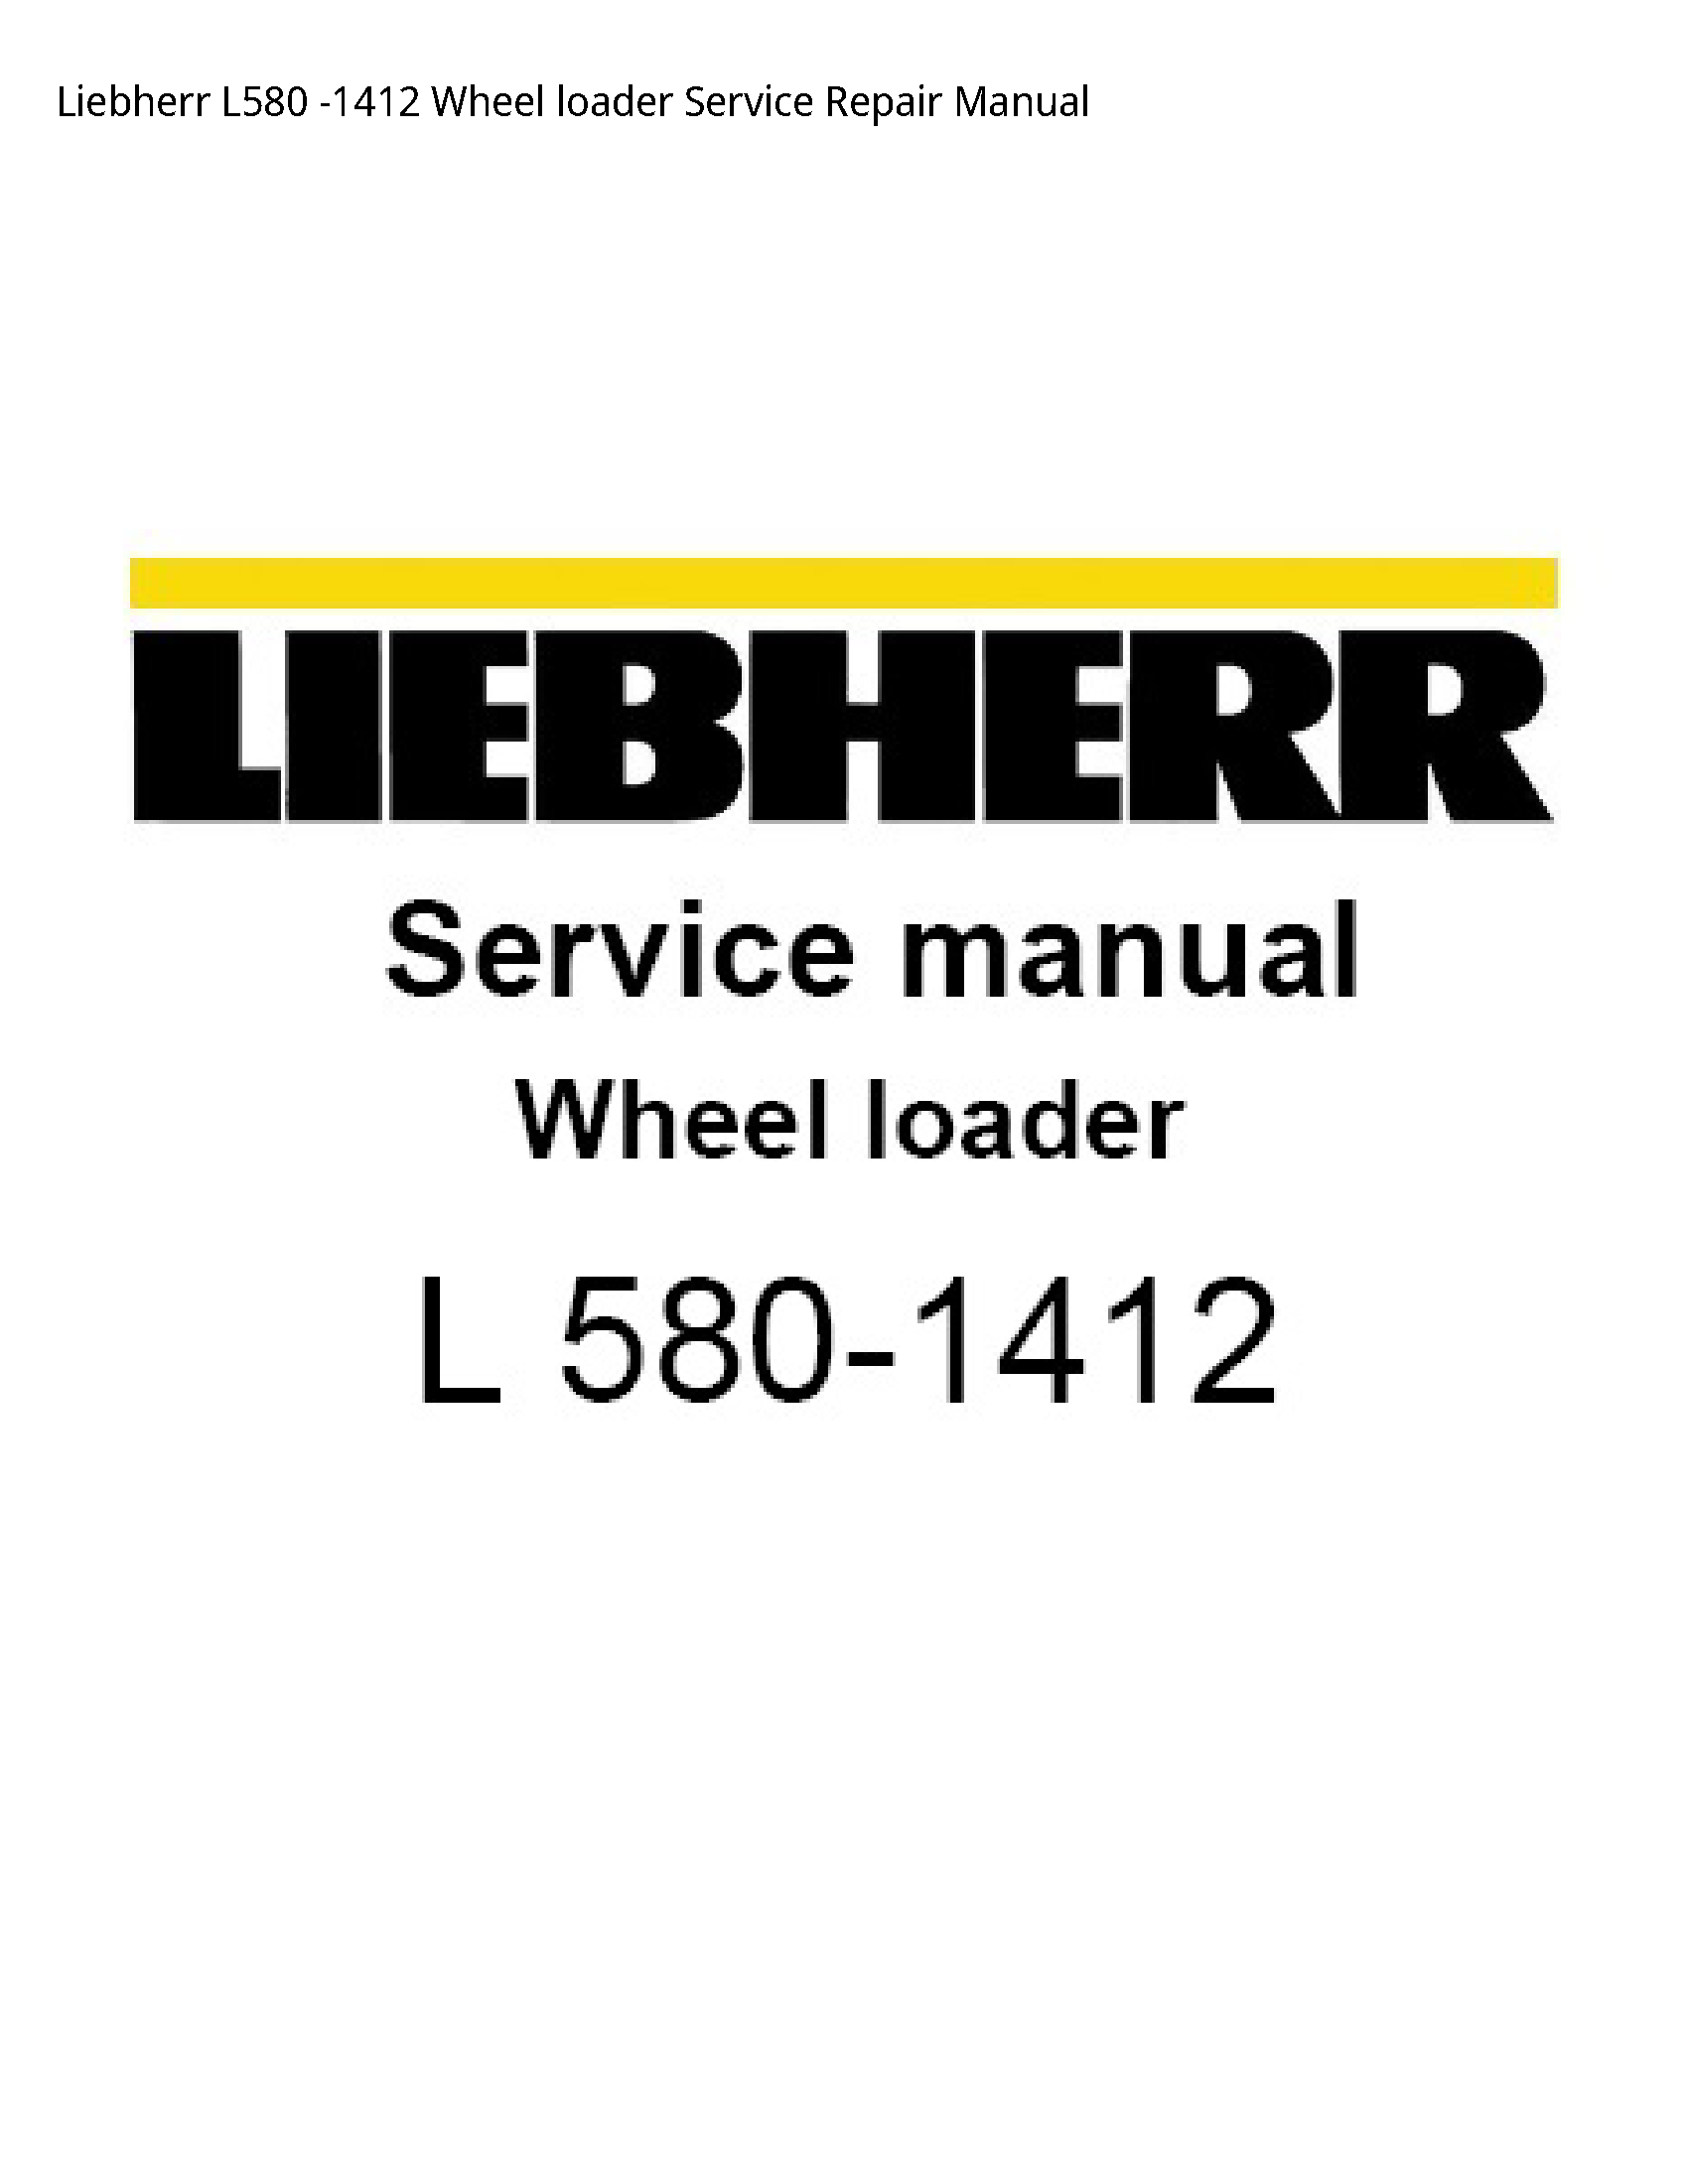 Liebherr L580 Wheel loader manual